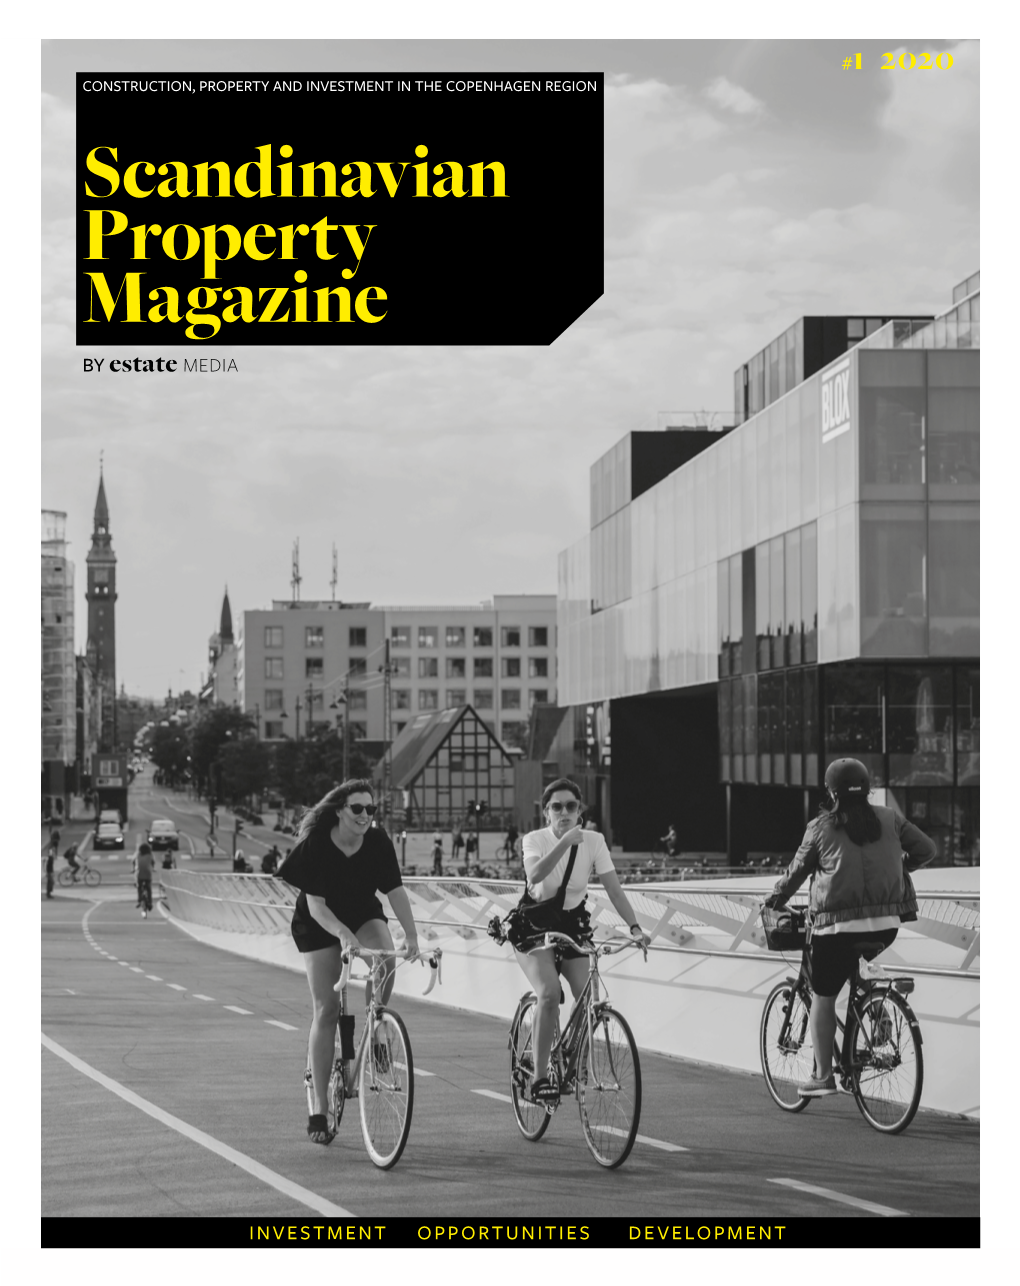 Scandinavian Property Magazine by Estate MEDIA